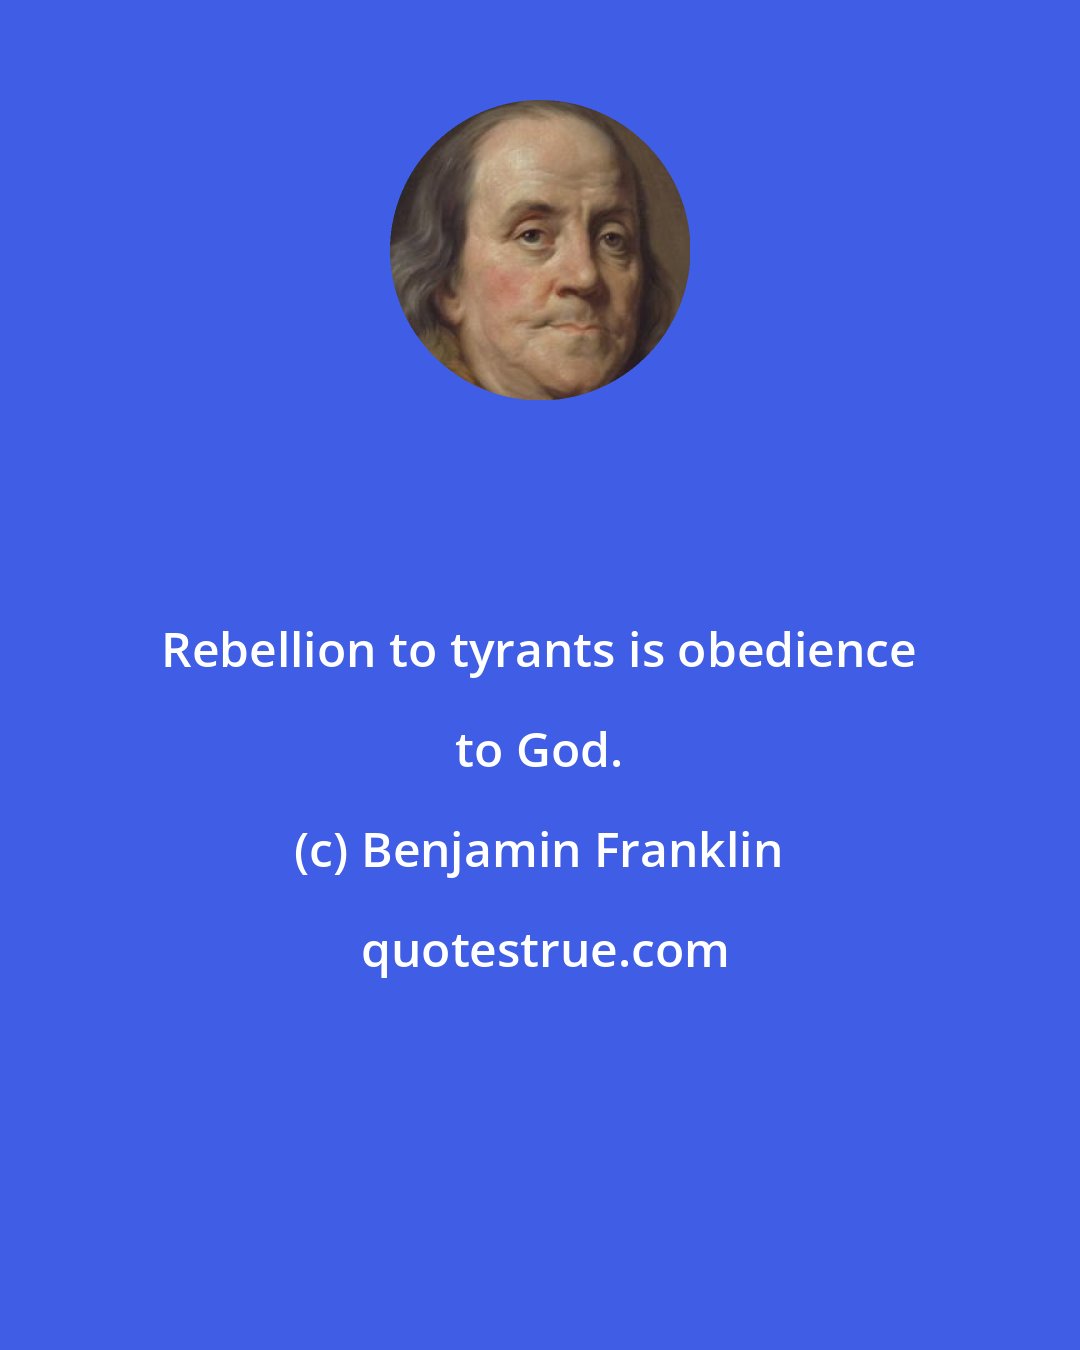 Benjamin Franklin: Rebellion to tyrants is obedience to God.